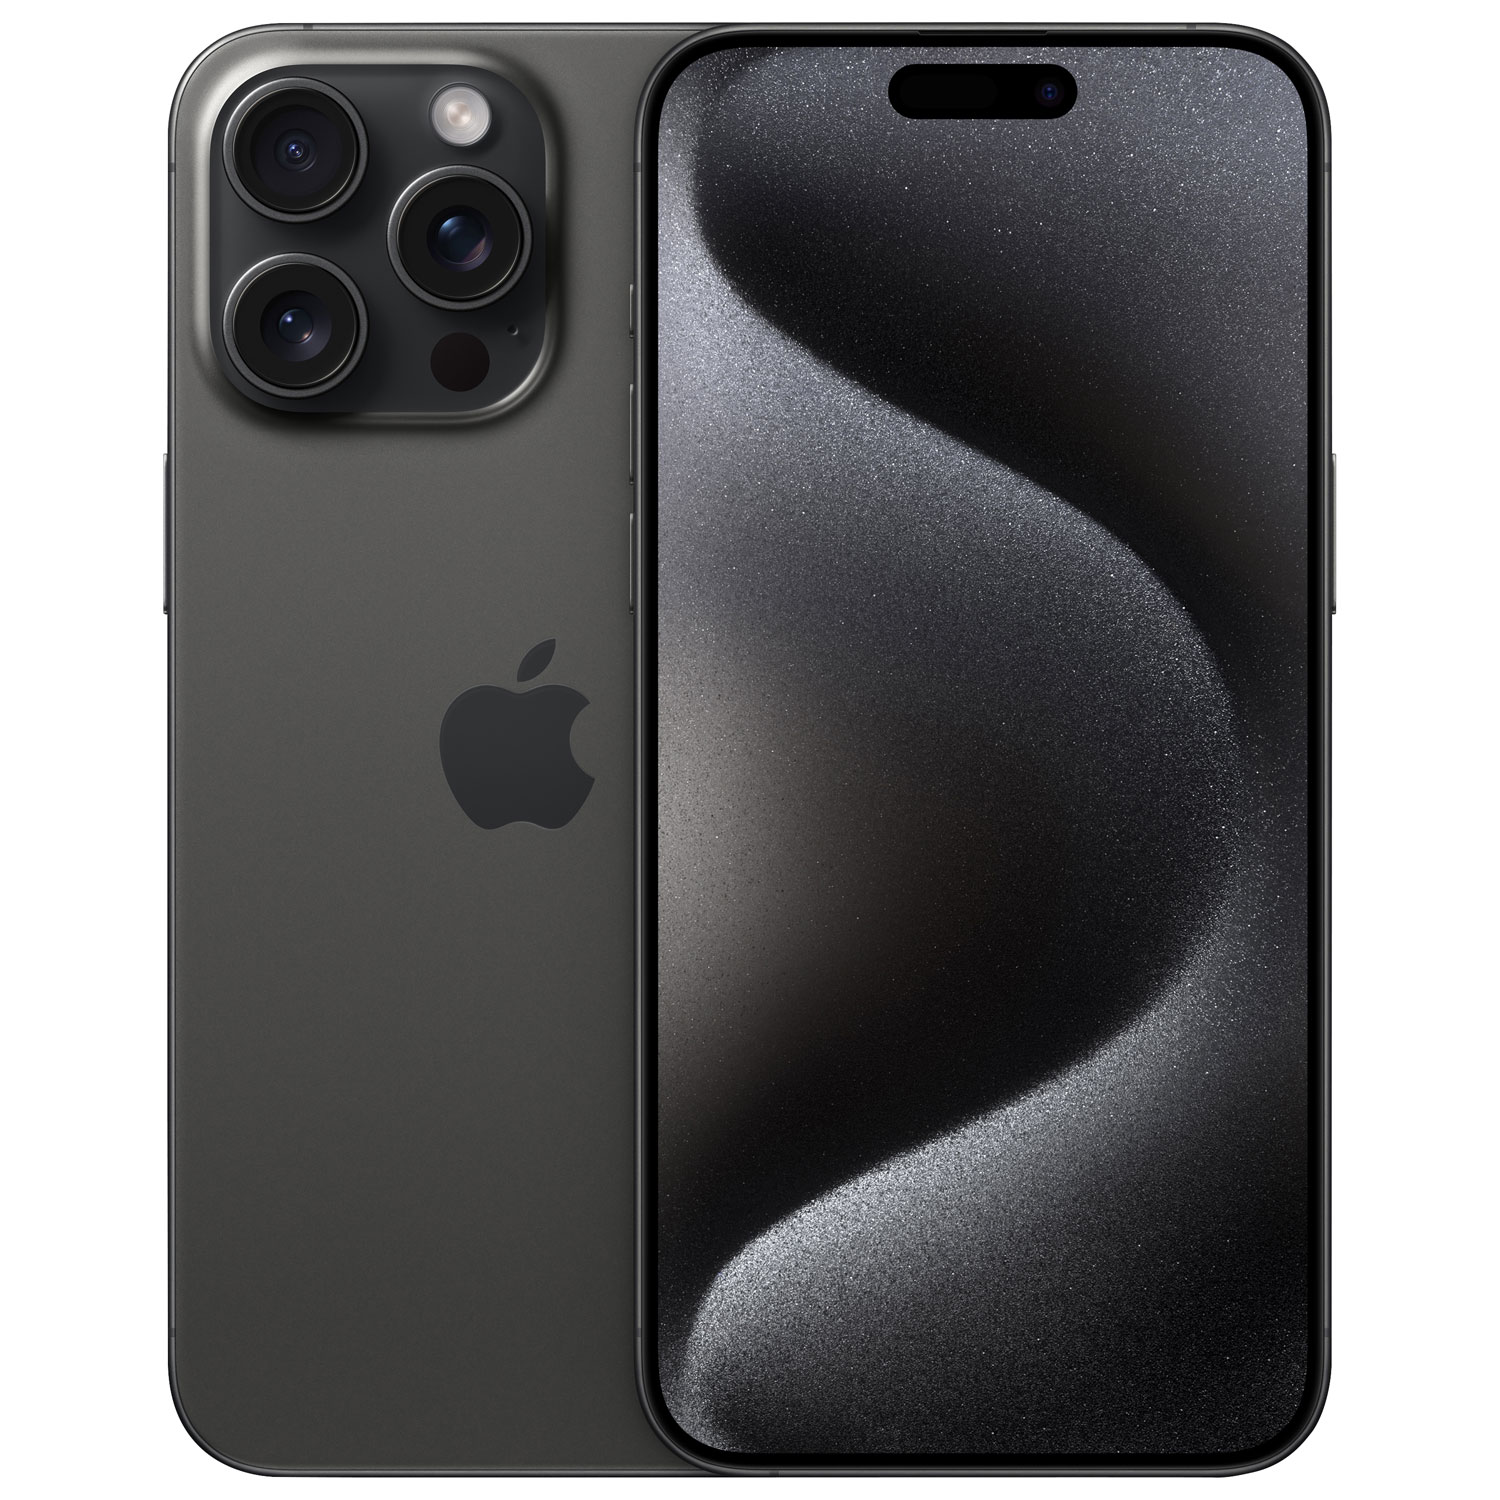 Fido Apple iPhone 15 Pro Max 256GB - Black Titanium - Monthly Financing